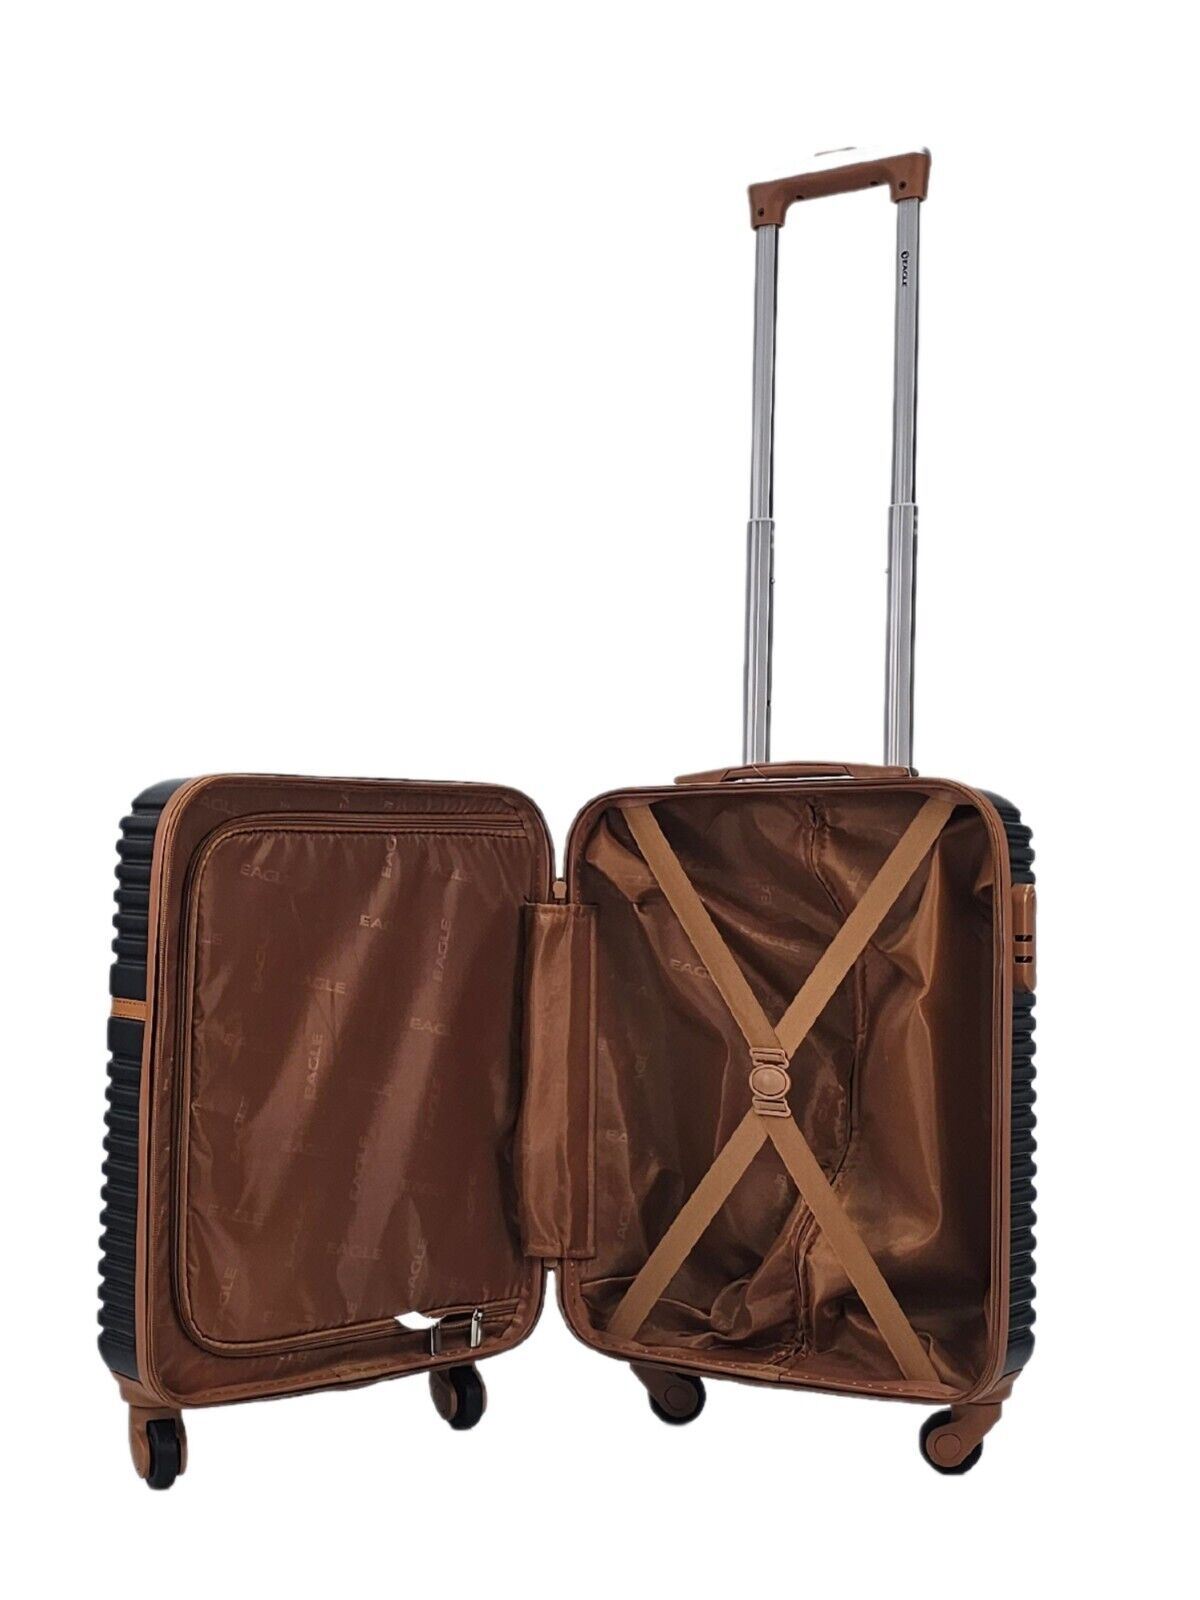 Hardshell Cabin Grey Suitcase Set Robust 4 Wheel ABS Luggage Travel Bag